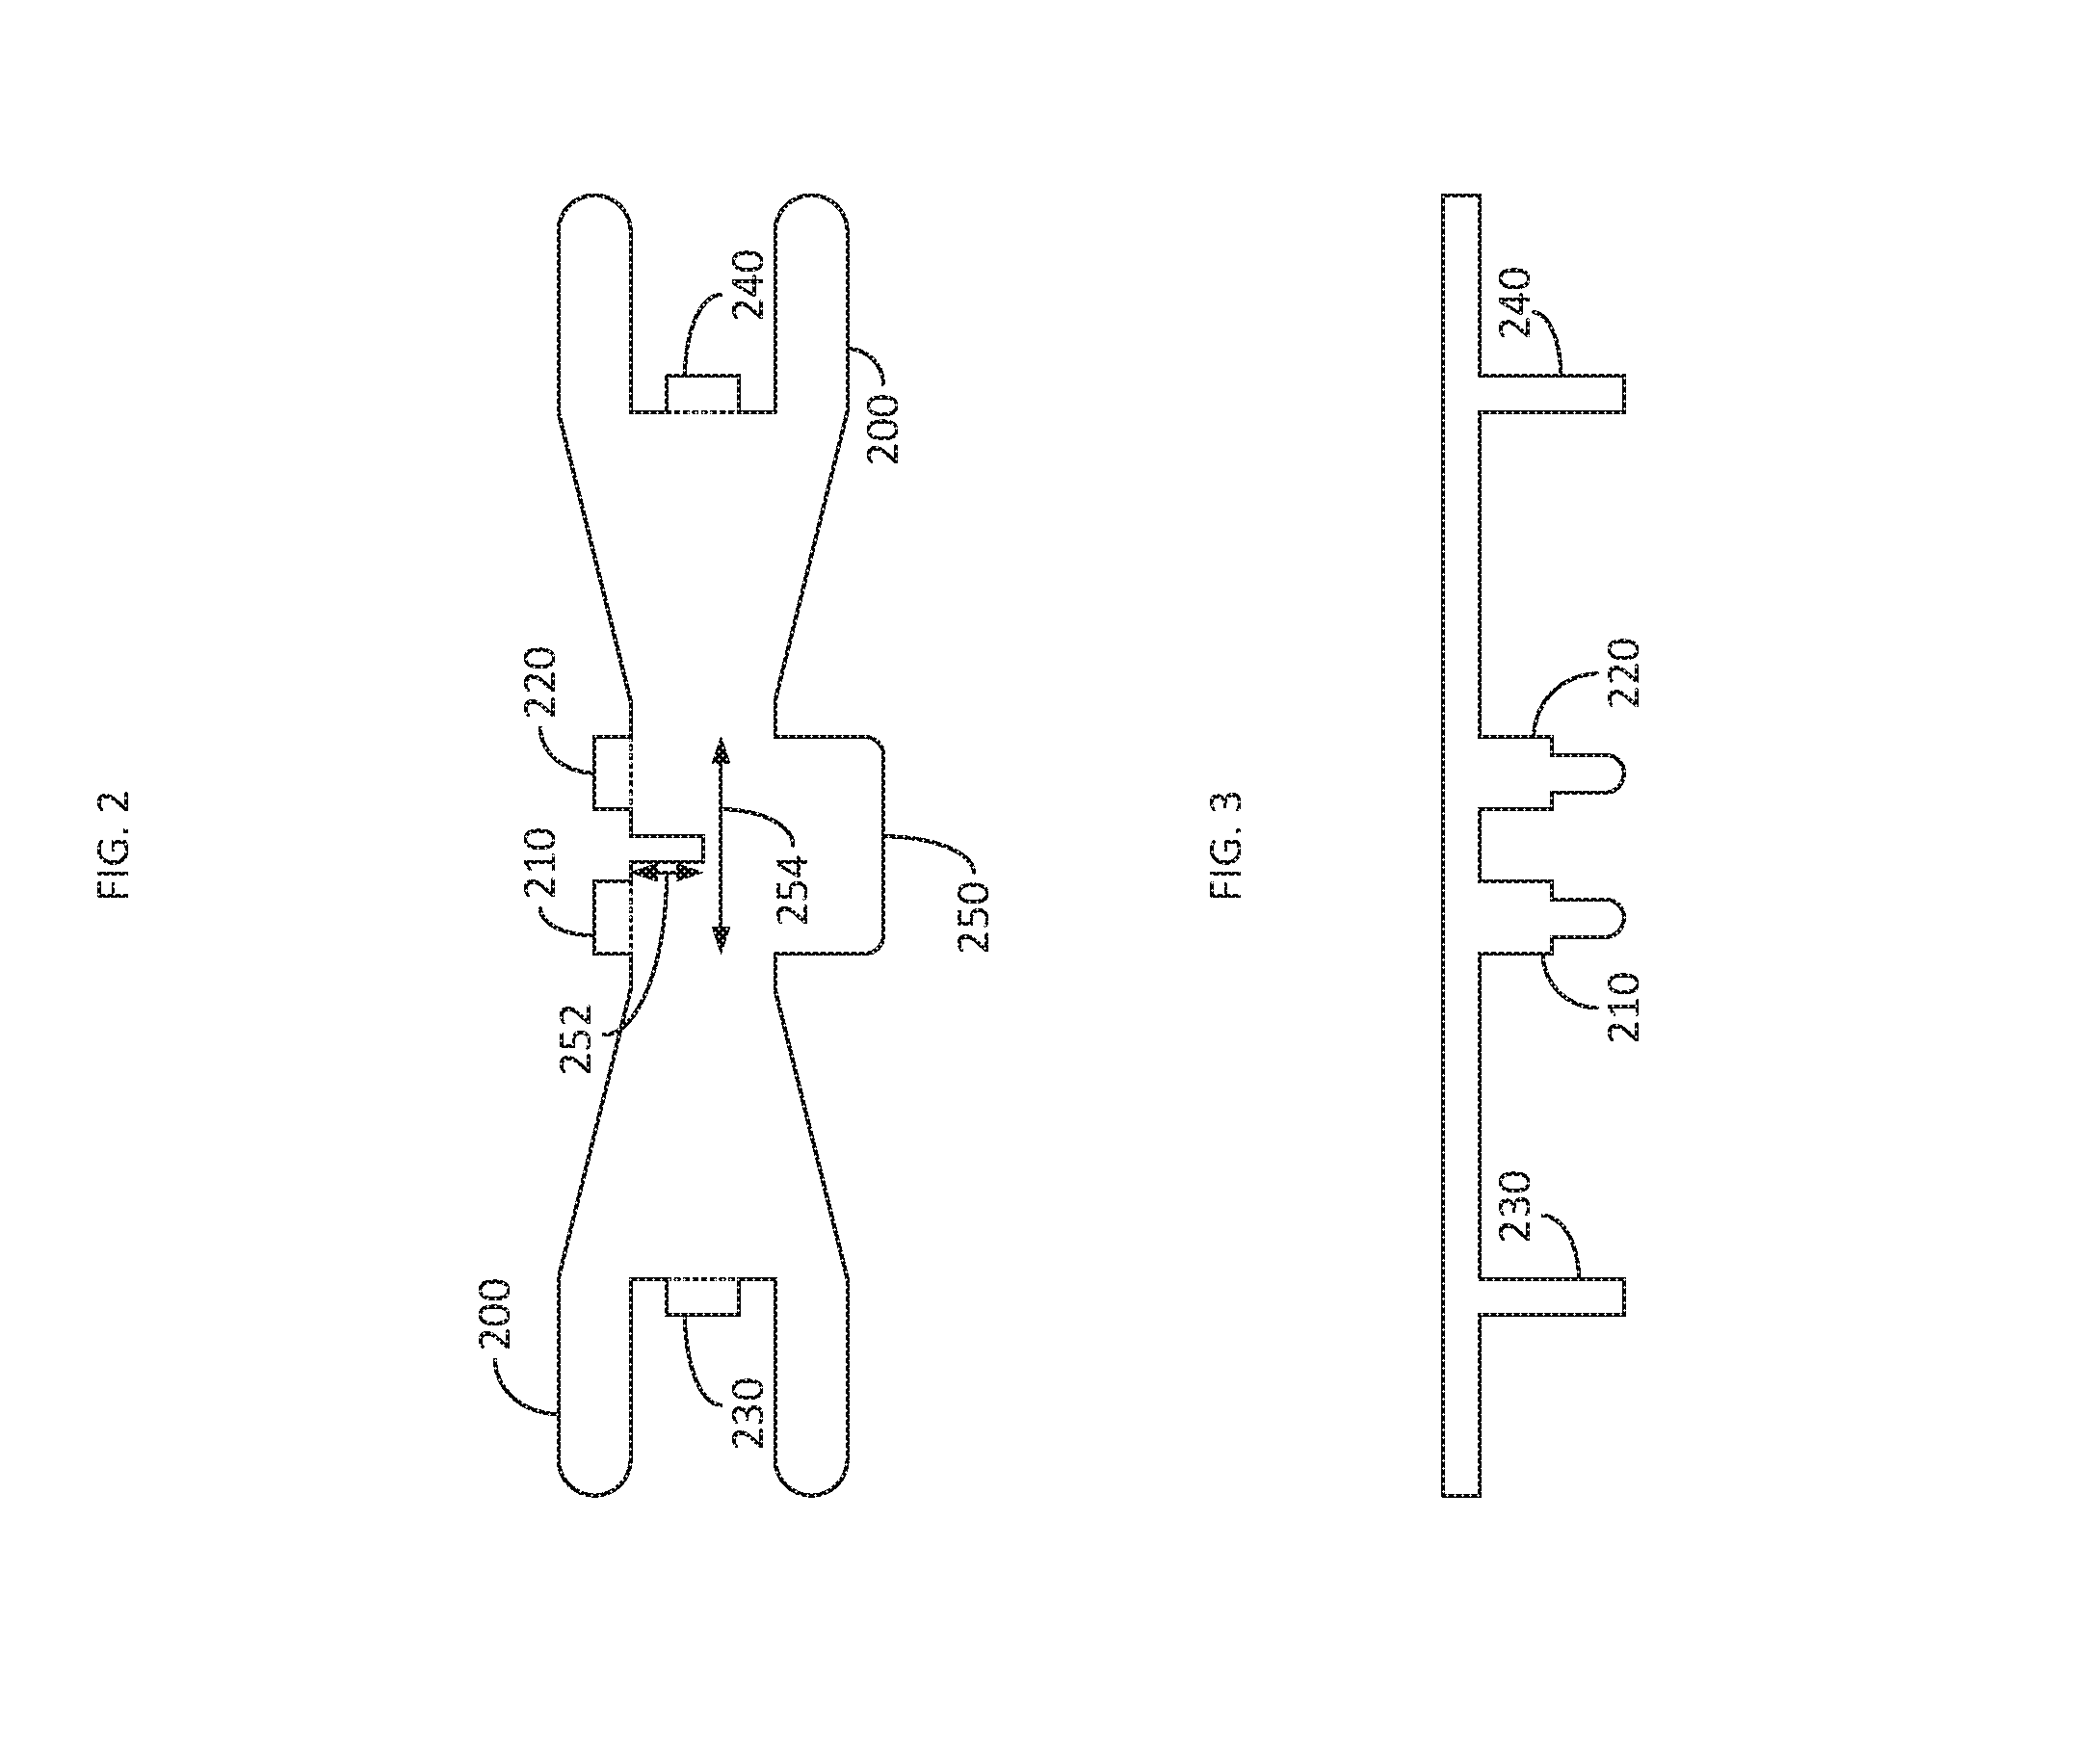 Multiple-input multiple-output (MIMO) antenna